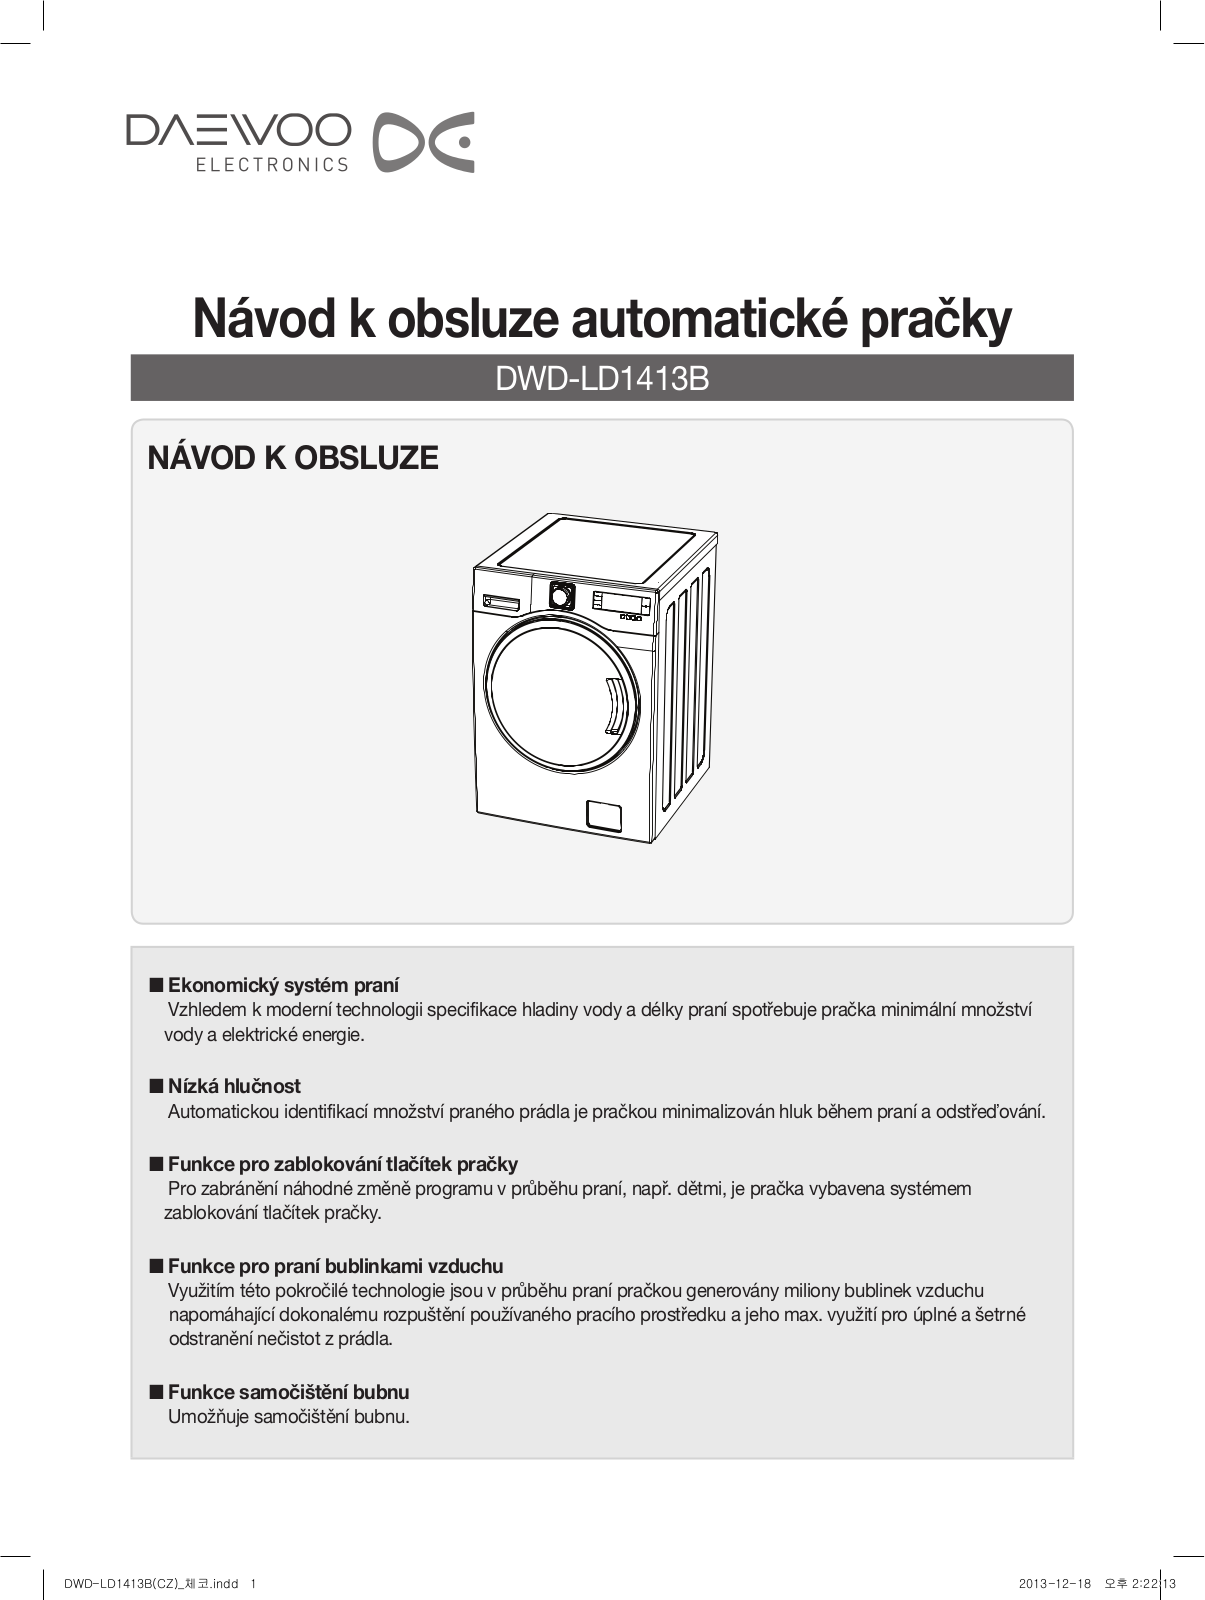 Daewoo DWD LD1413B User Manual